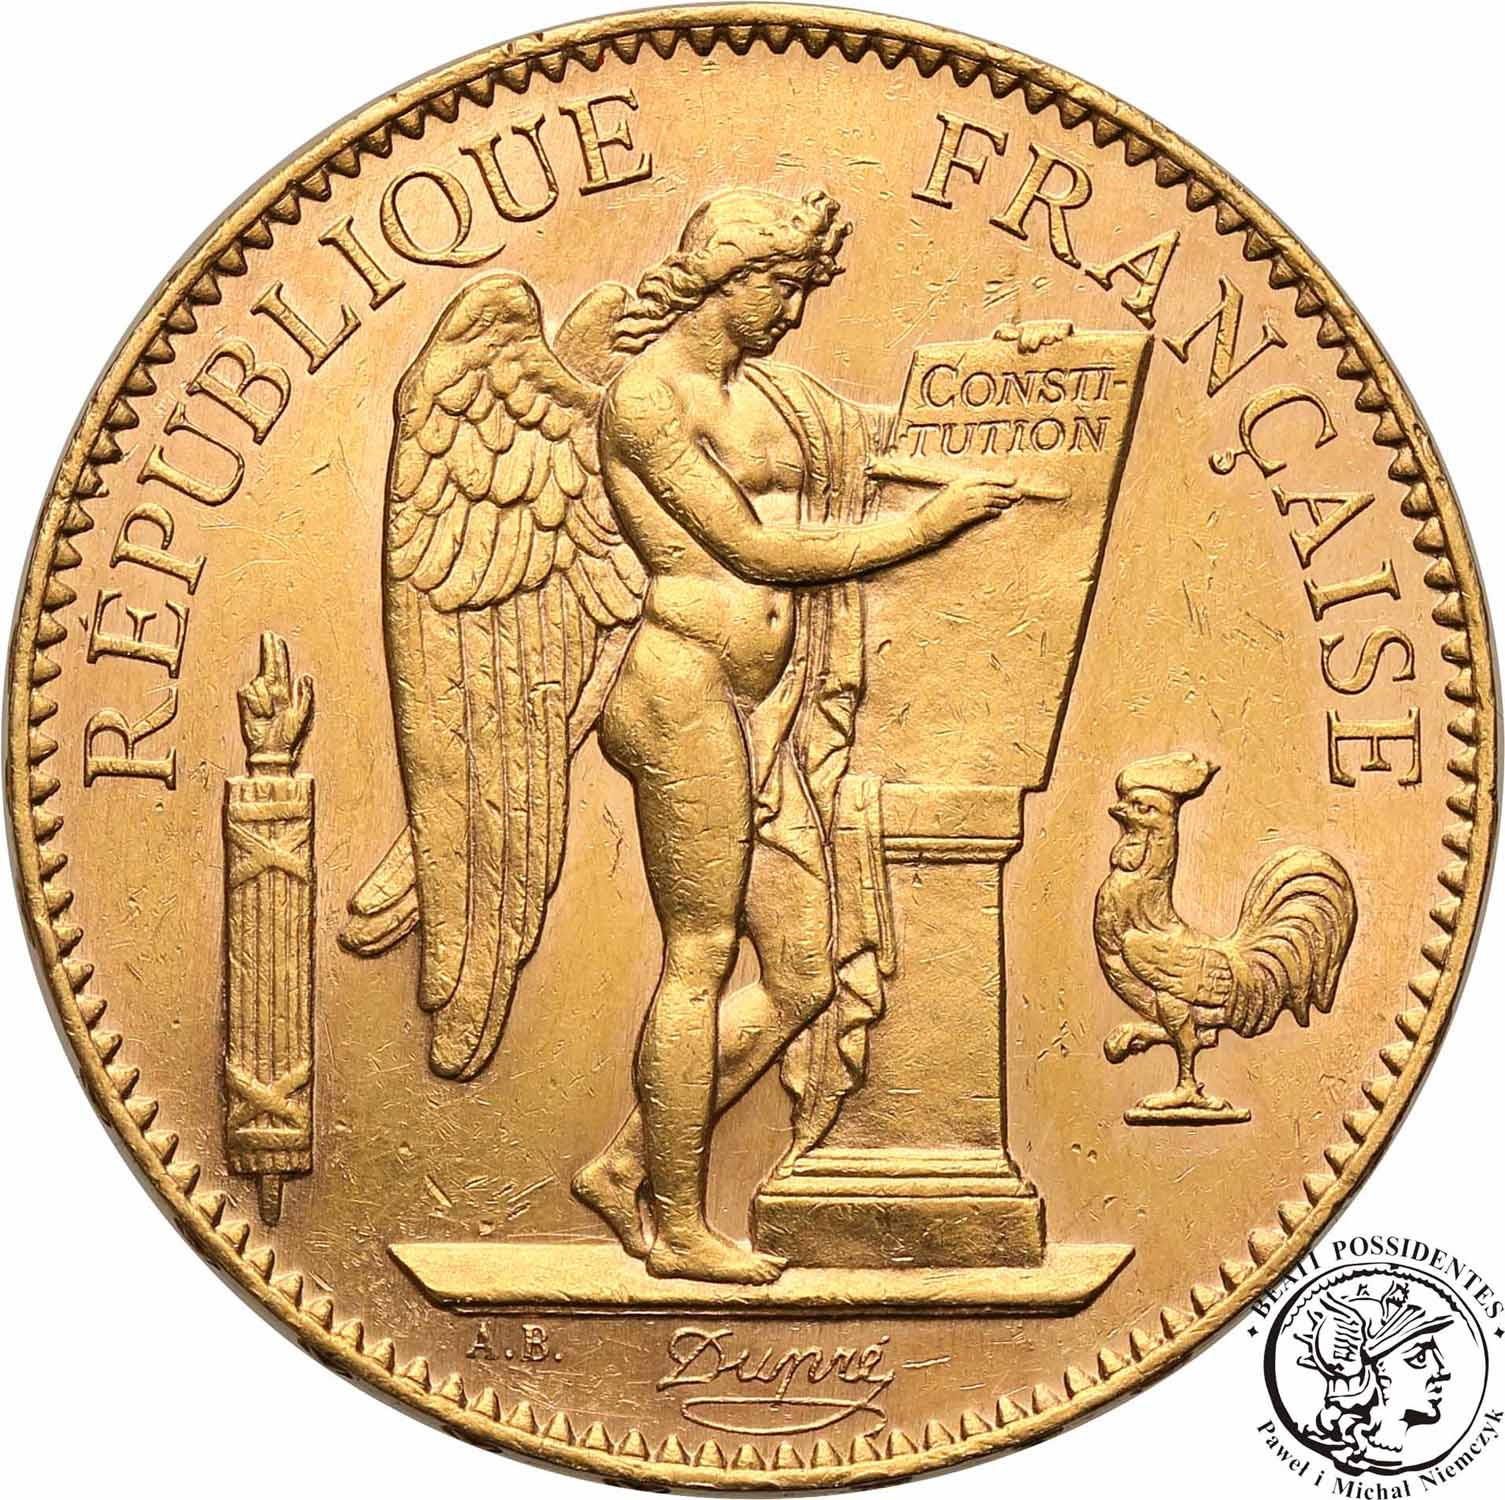 Francja 100 franków 1902 A - Anioł st. 2+